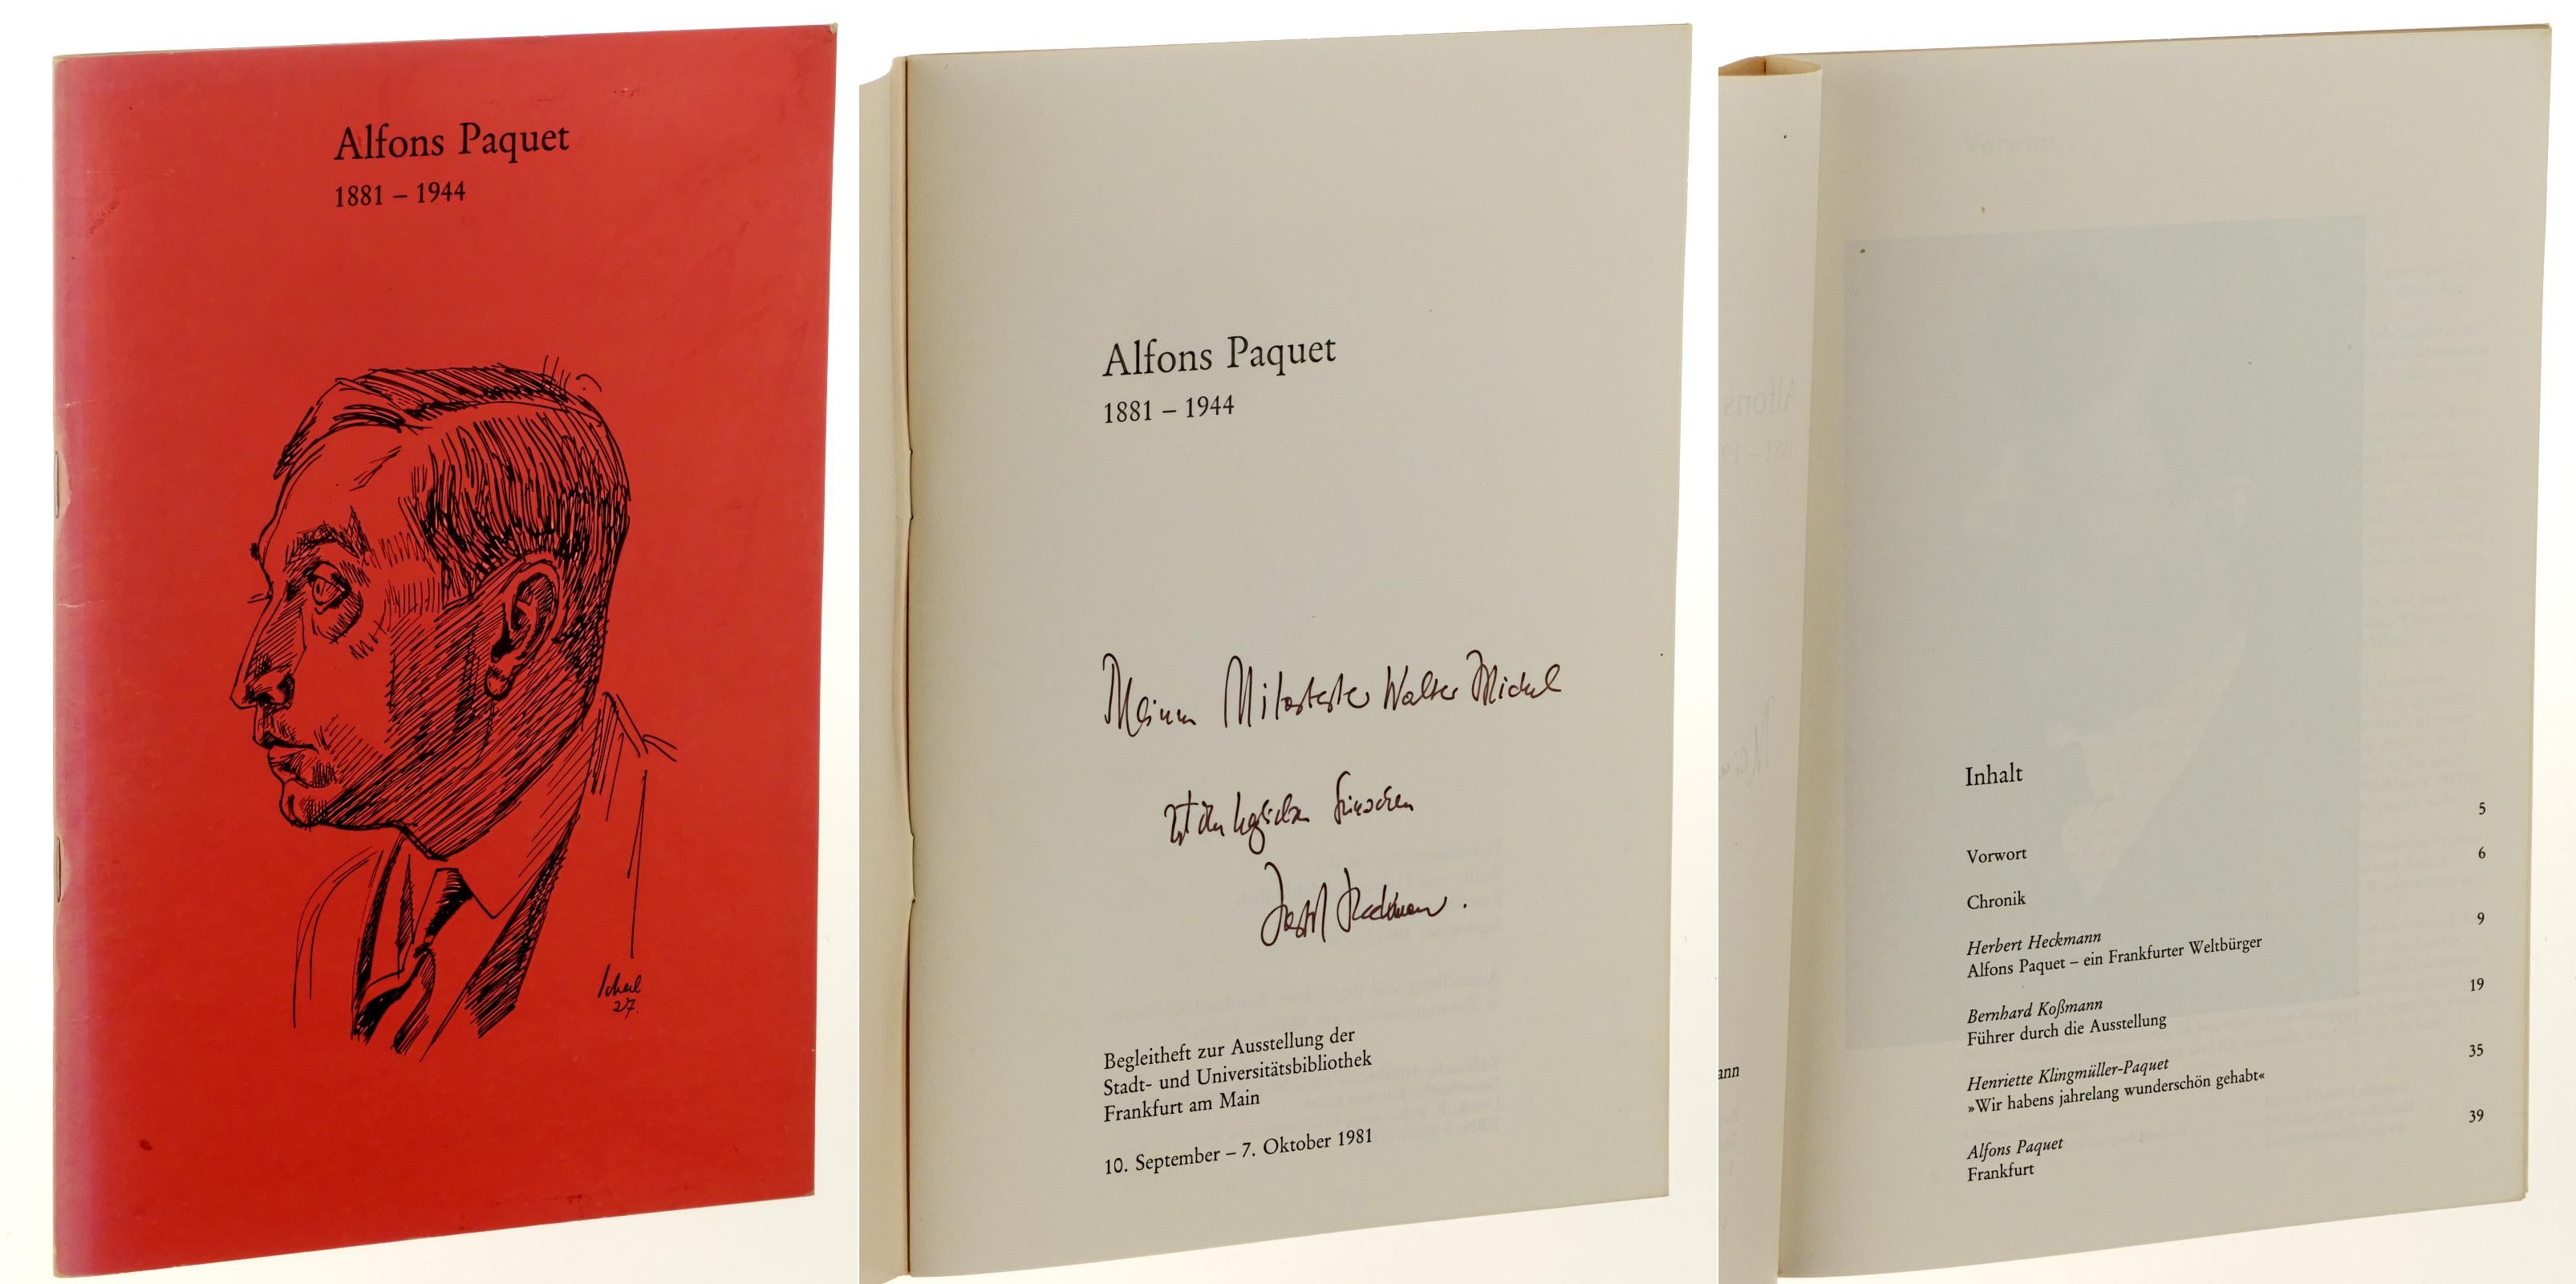   Alfons Paquet. 1881 - 1944.  Begleitheft zur Ausstellung der Stadt- und Universitätsbibliothek Frankfurt am Main, 10. September - 7. Oktober 1981. 